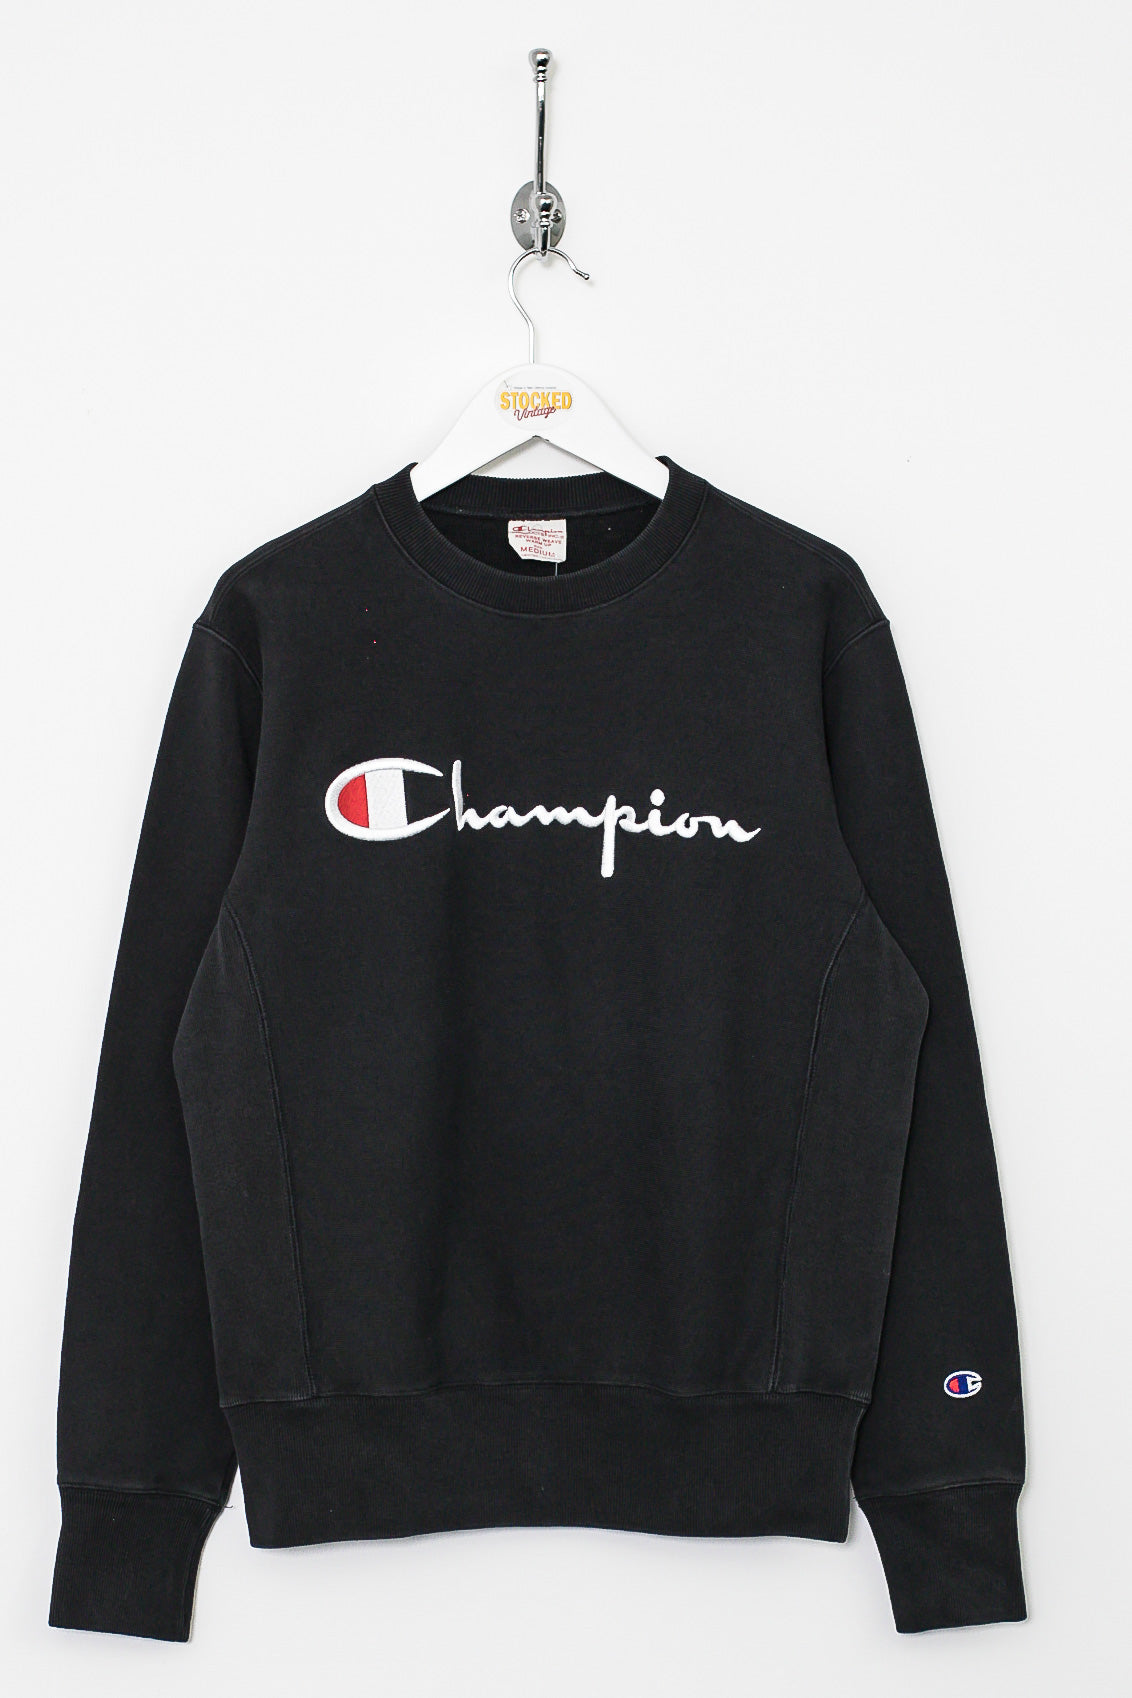 Champion Reverse Weave Sweatshirt (S)